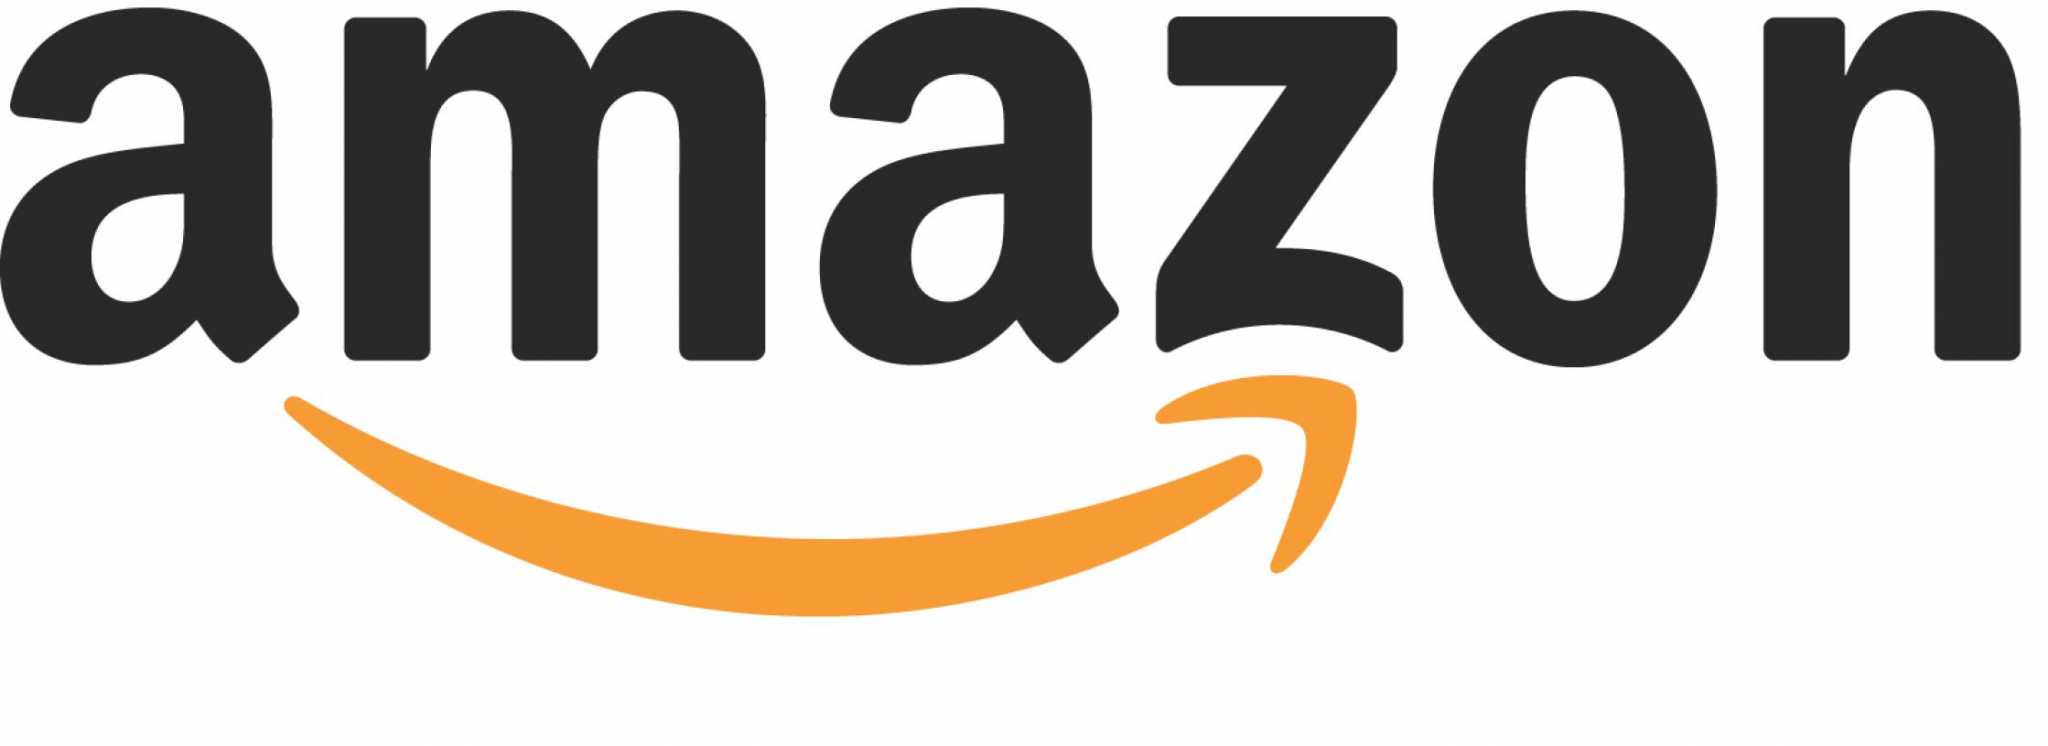 Amazon.co.uk Logo - Amazon Prime UK Members to Receive Unlimited Photo Storage - n3rdabl3